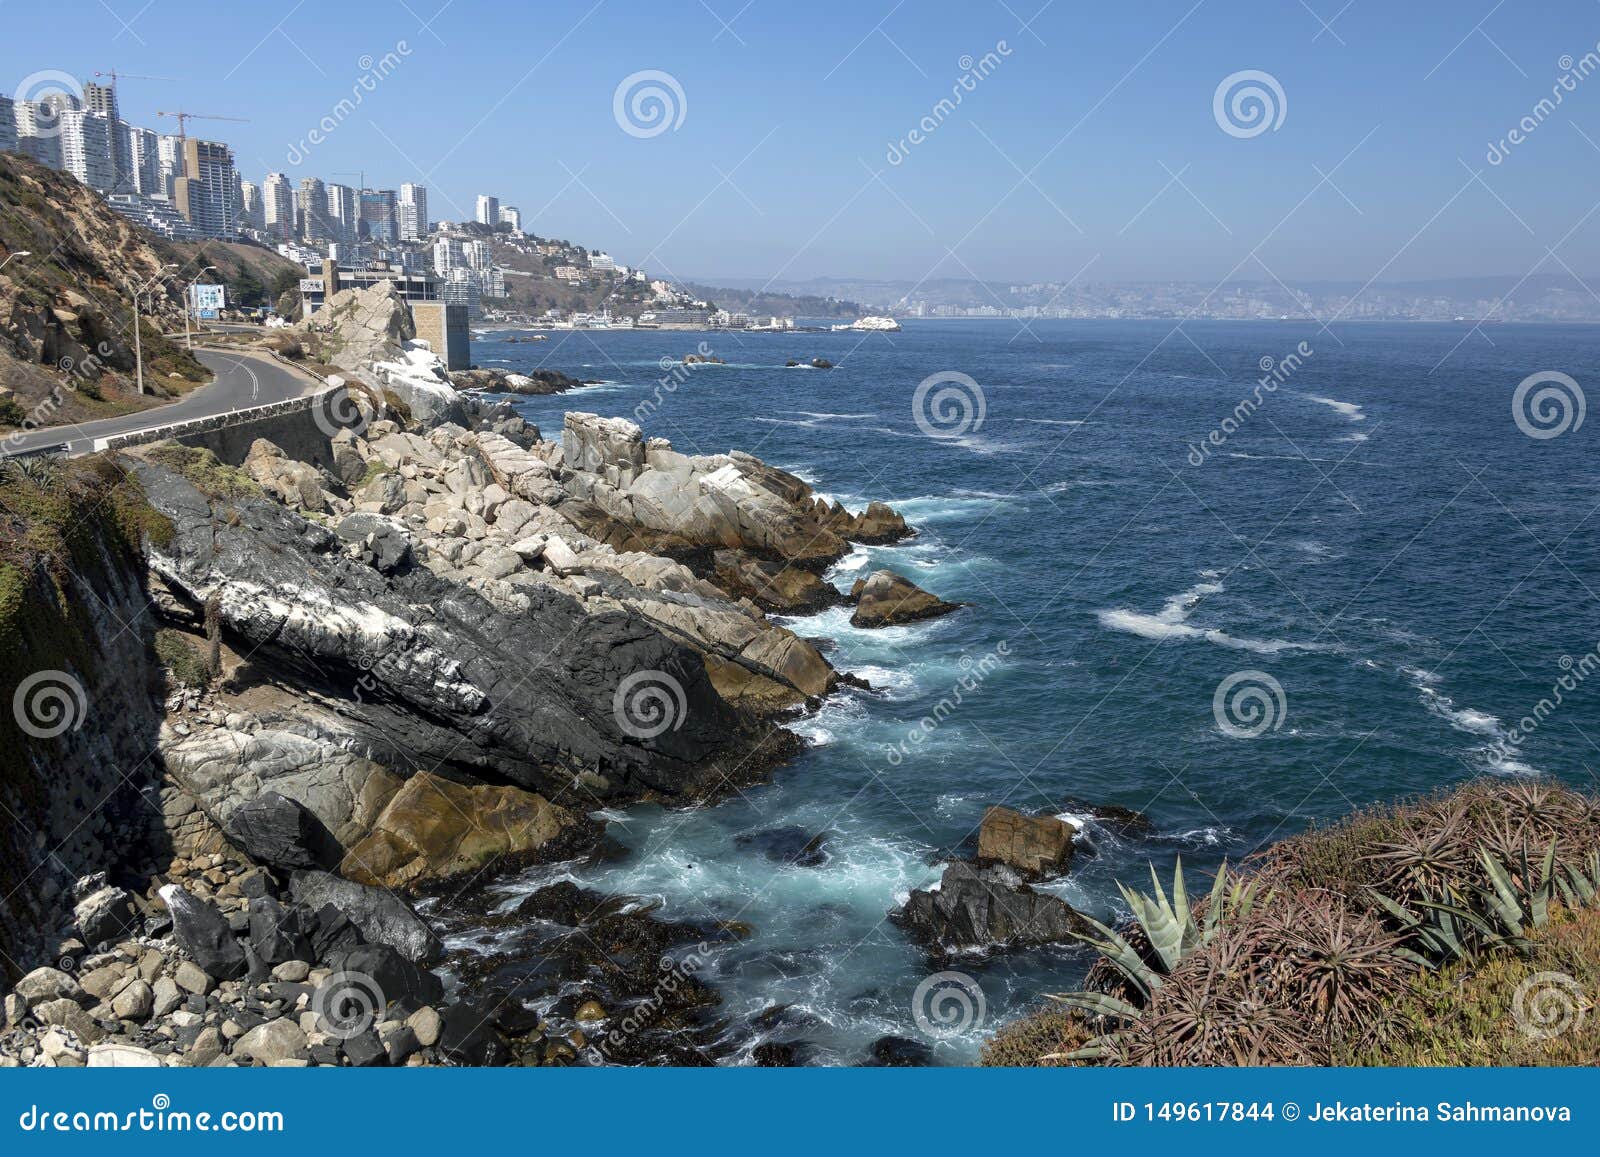 Concon Chilean Coastline City Located On The Pacific Coast In Valparaiso Province Chile Latin America Editorial Stock Image Image Of Beach Holiday